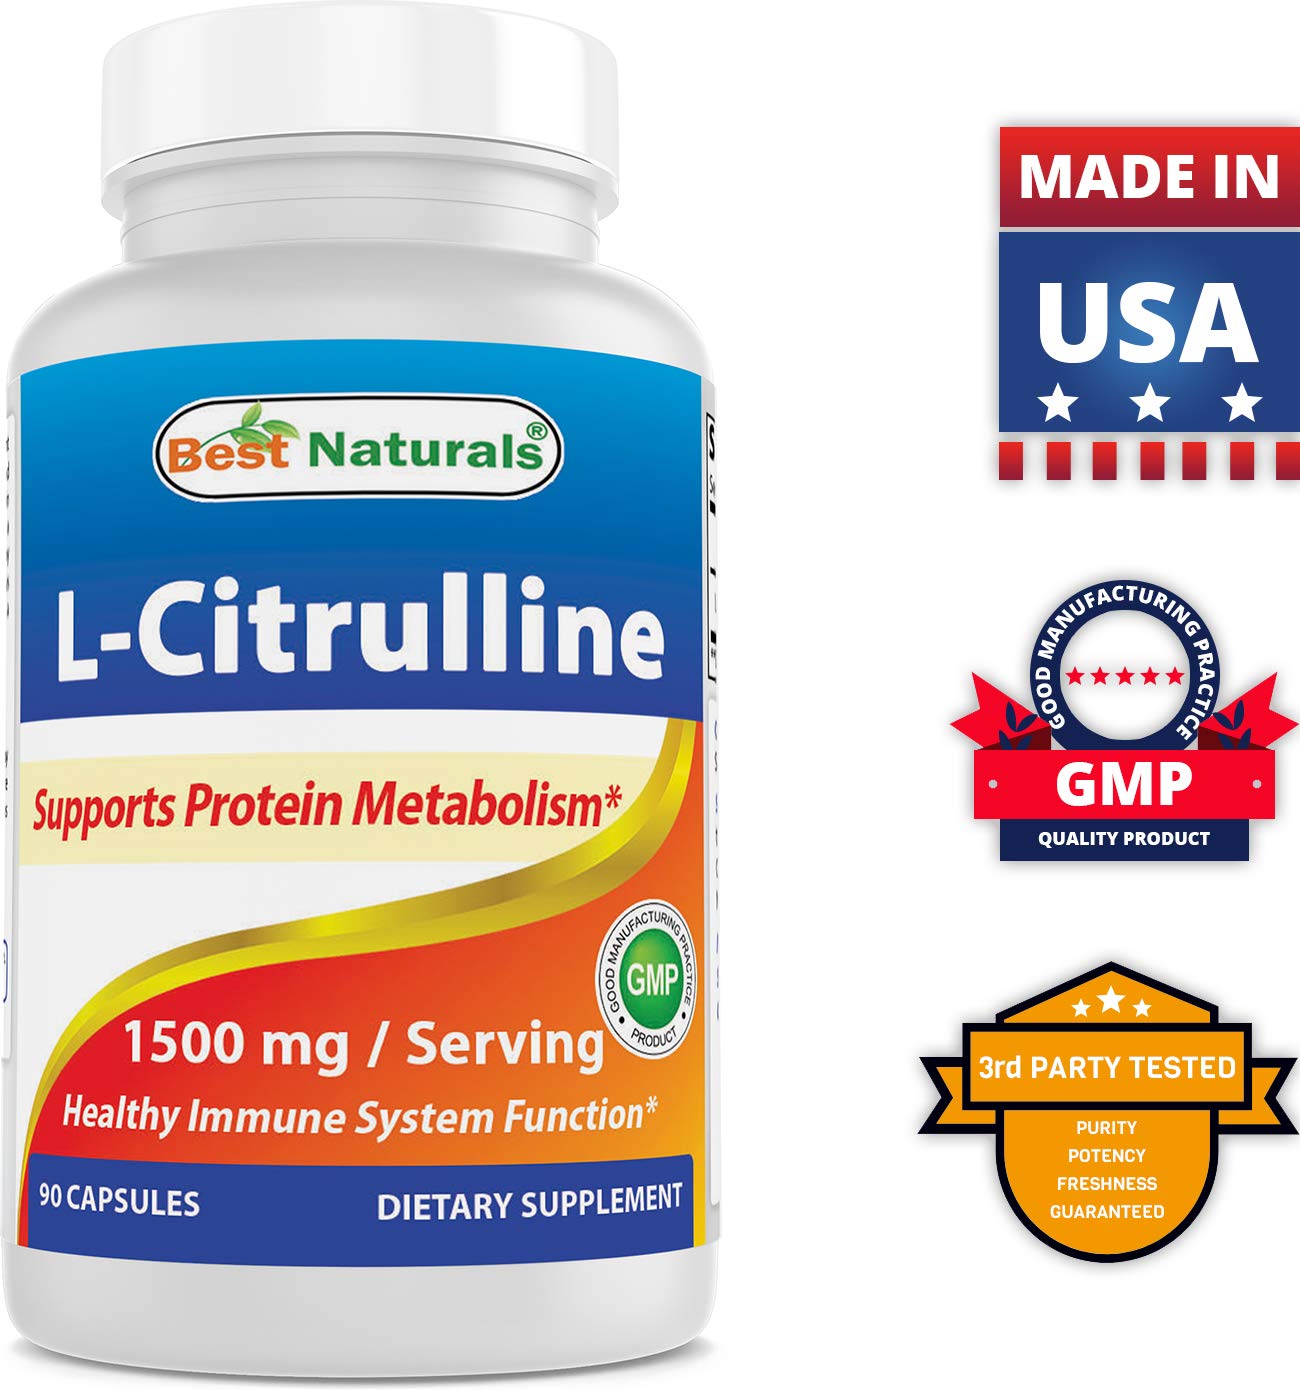 Best Naturals L-Arginine L-Ornithine - 1000mg & L-Citrulline 1500mg